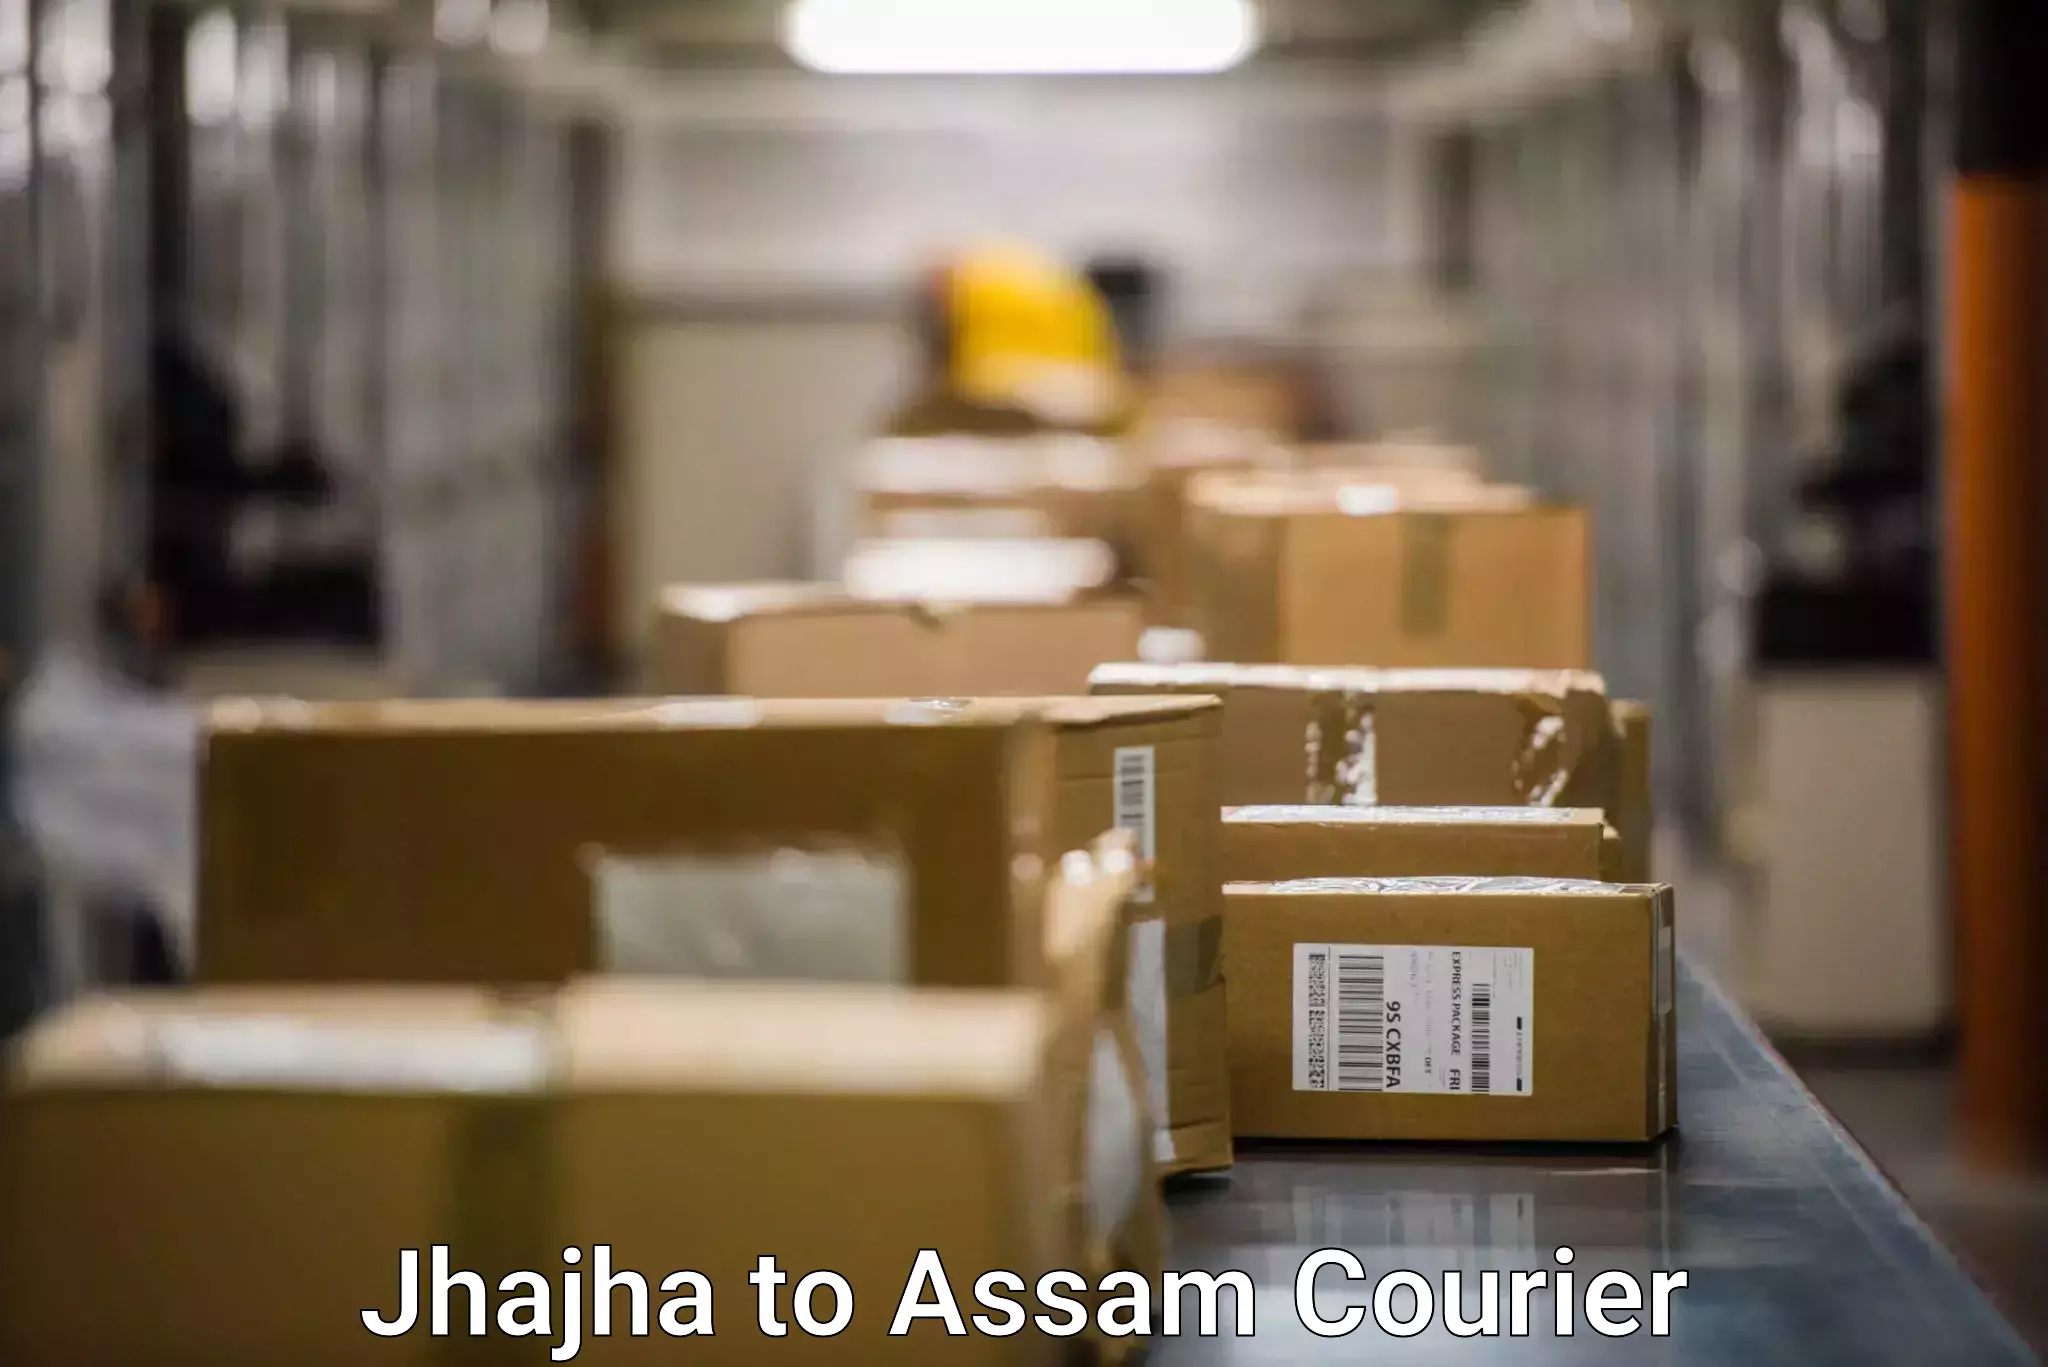 Courier service innovation Jhajha to Guwahati